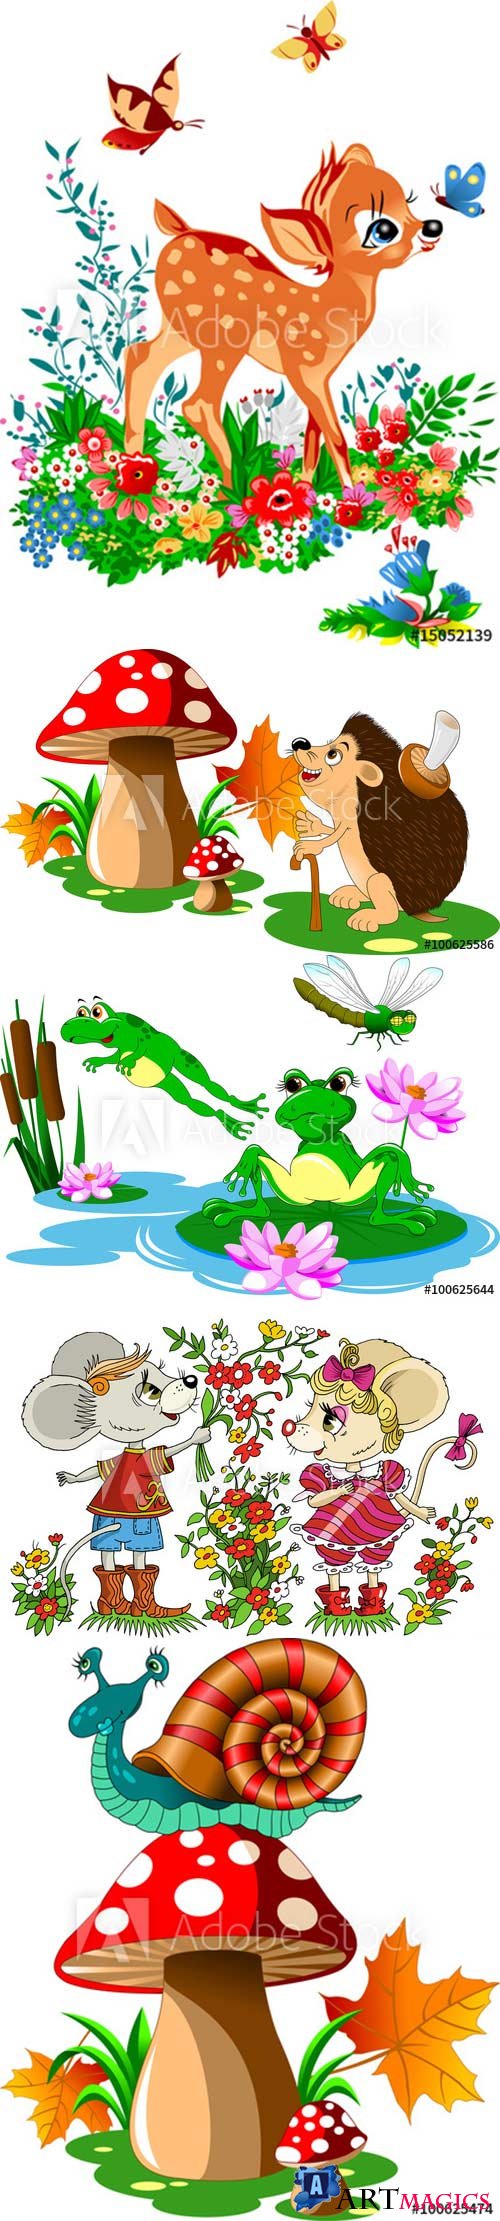 Cartoon vector illustration with animals